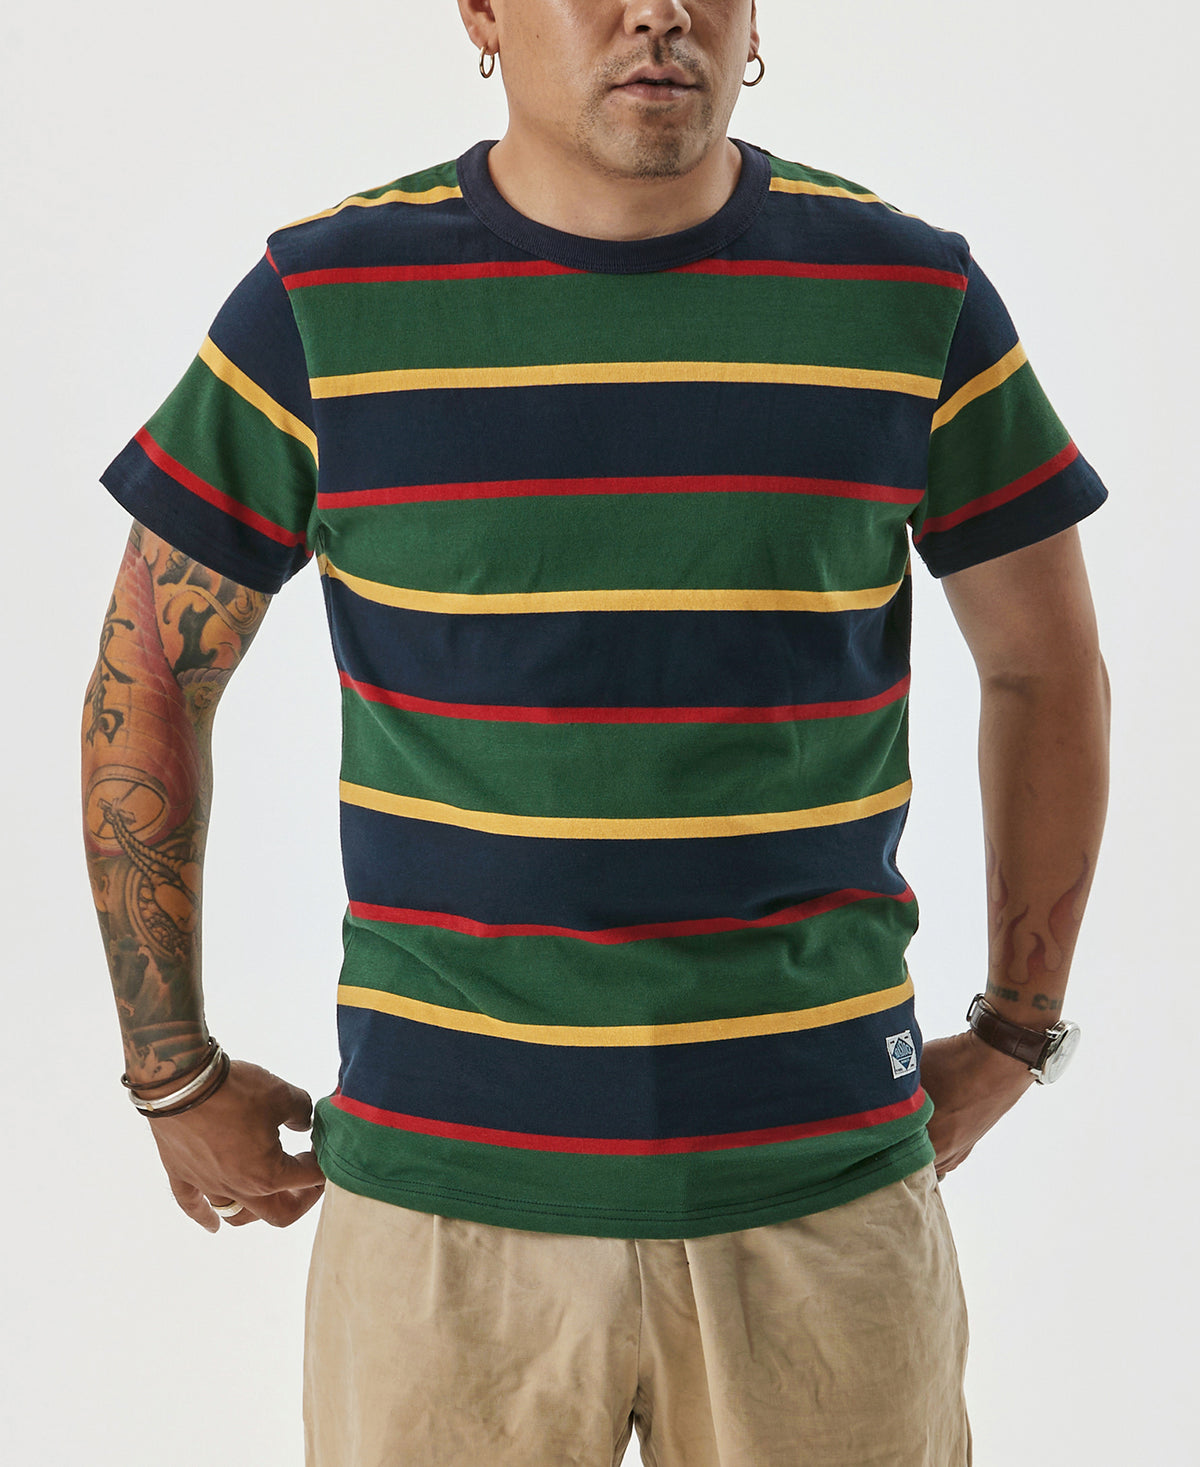 9.8 oz IVY Style Striped T-Shirt - Navy/Green